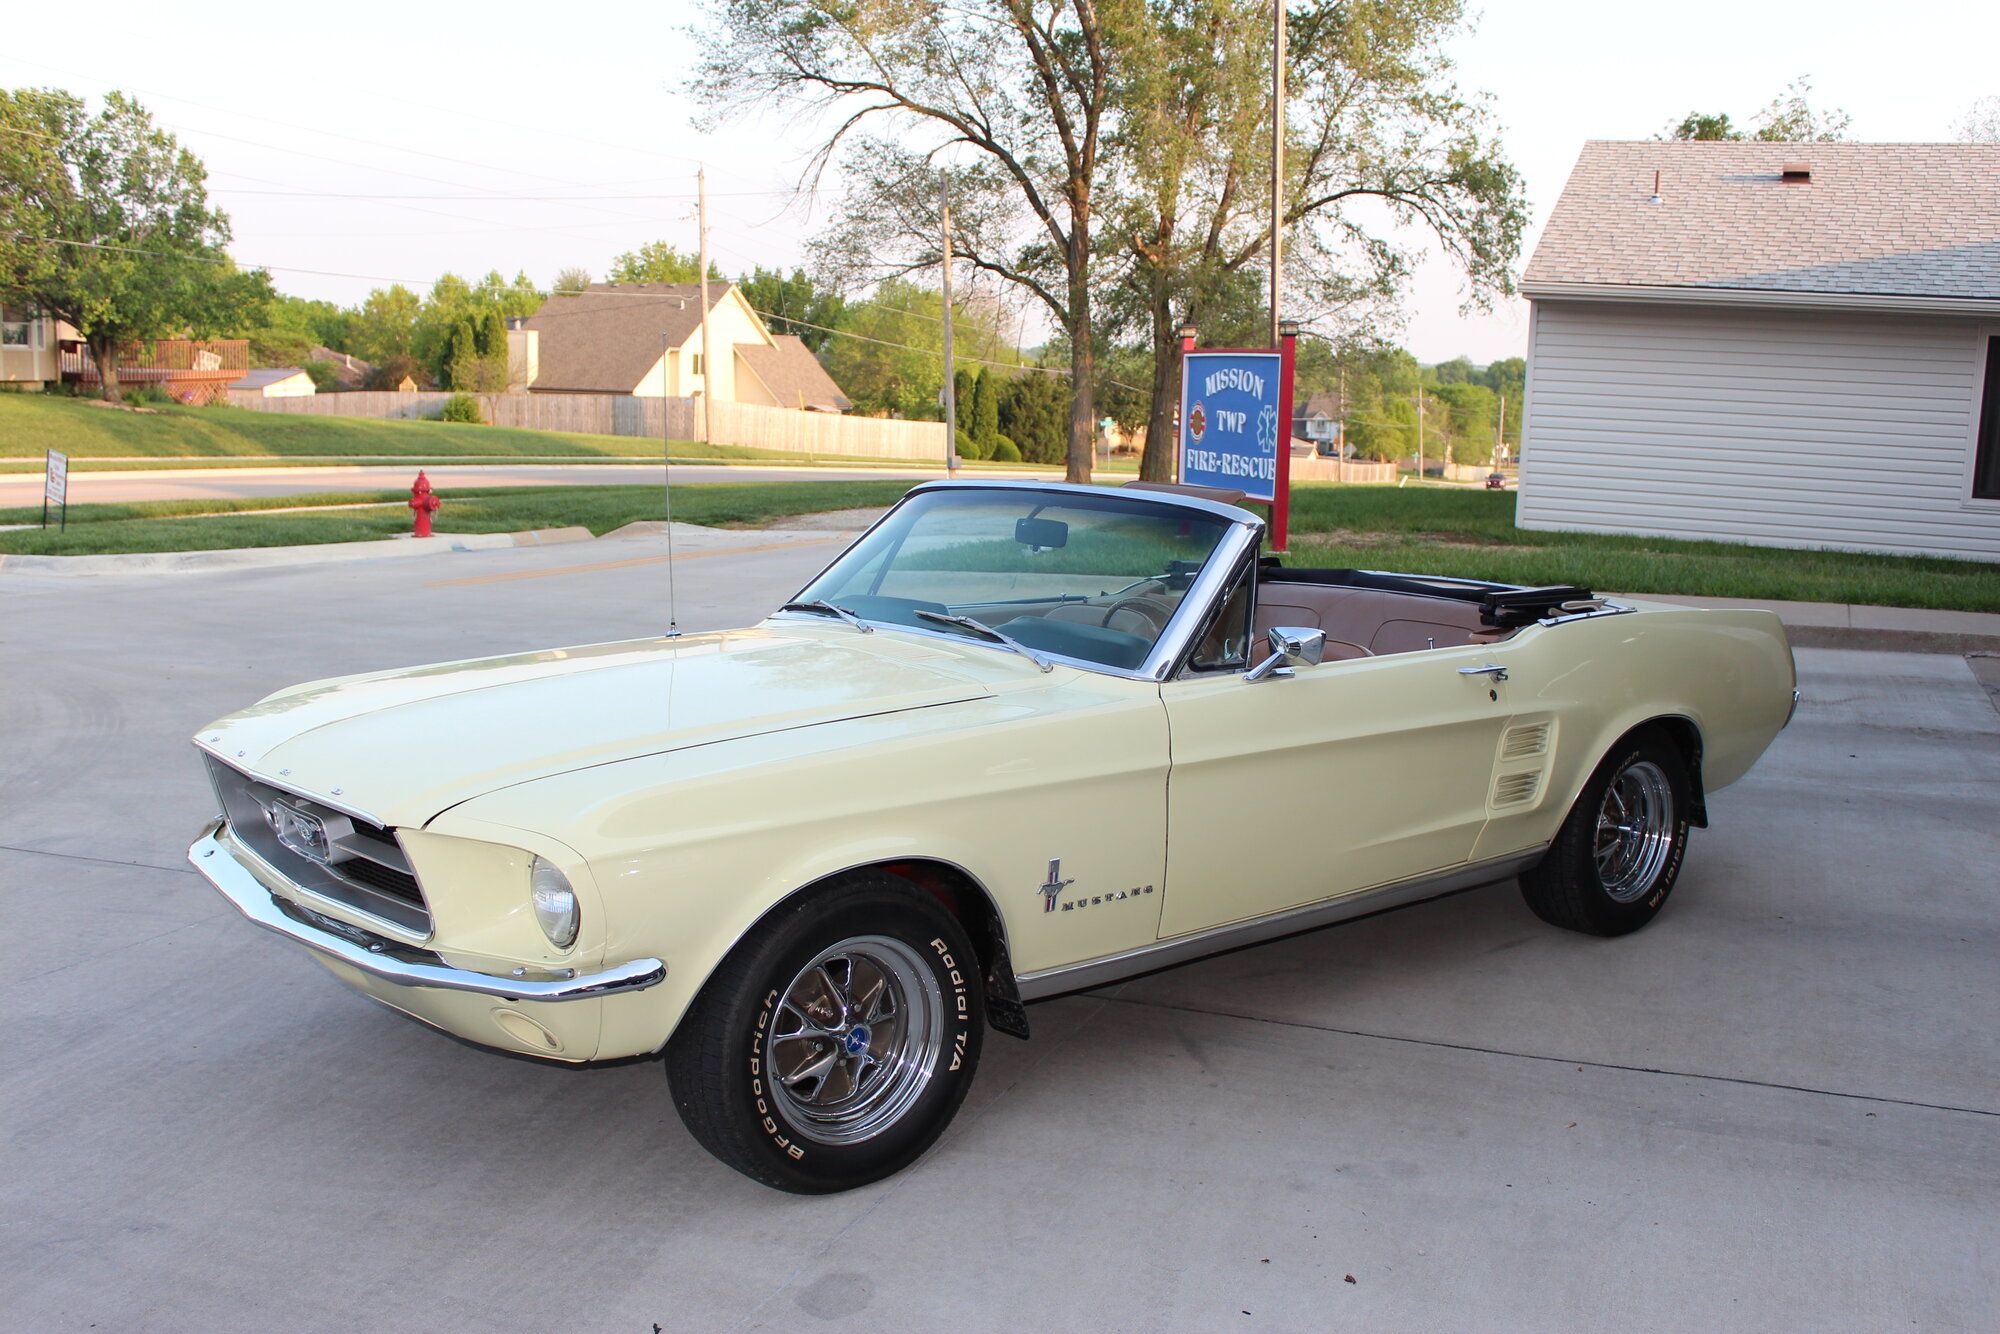 1967 Mustang
(Springtime Convertible)